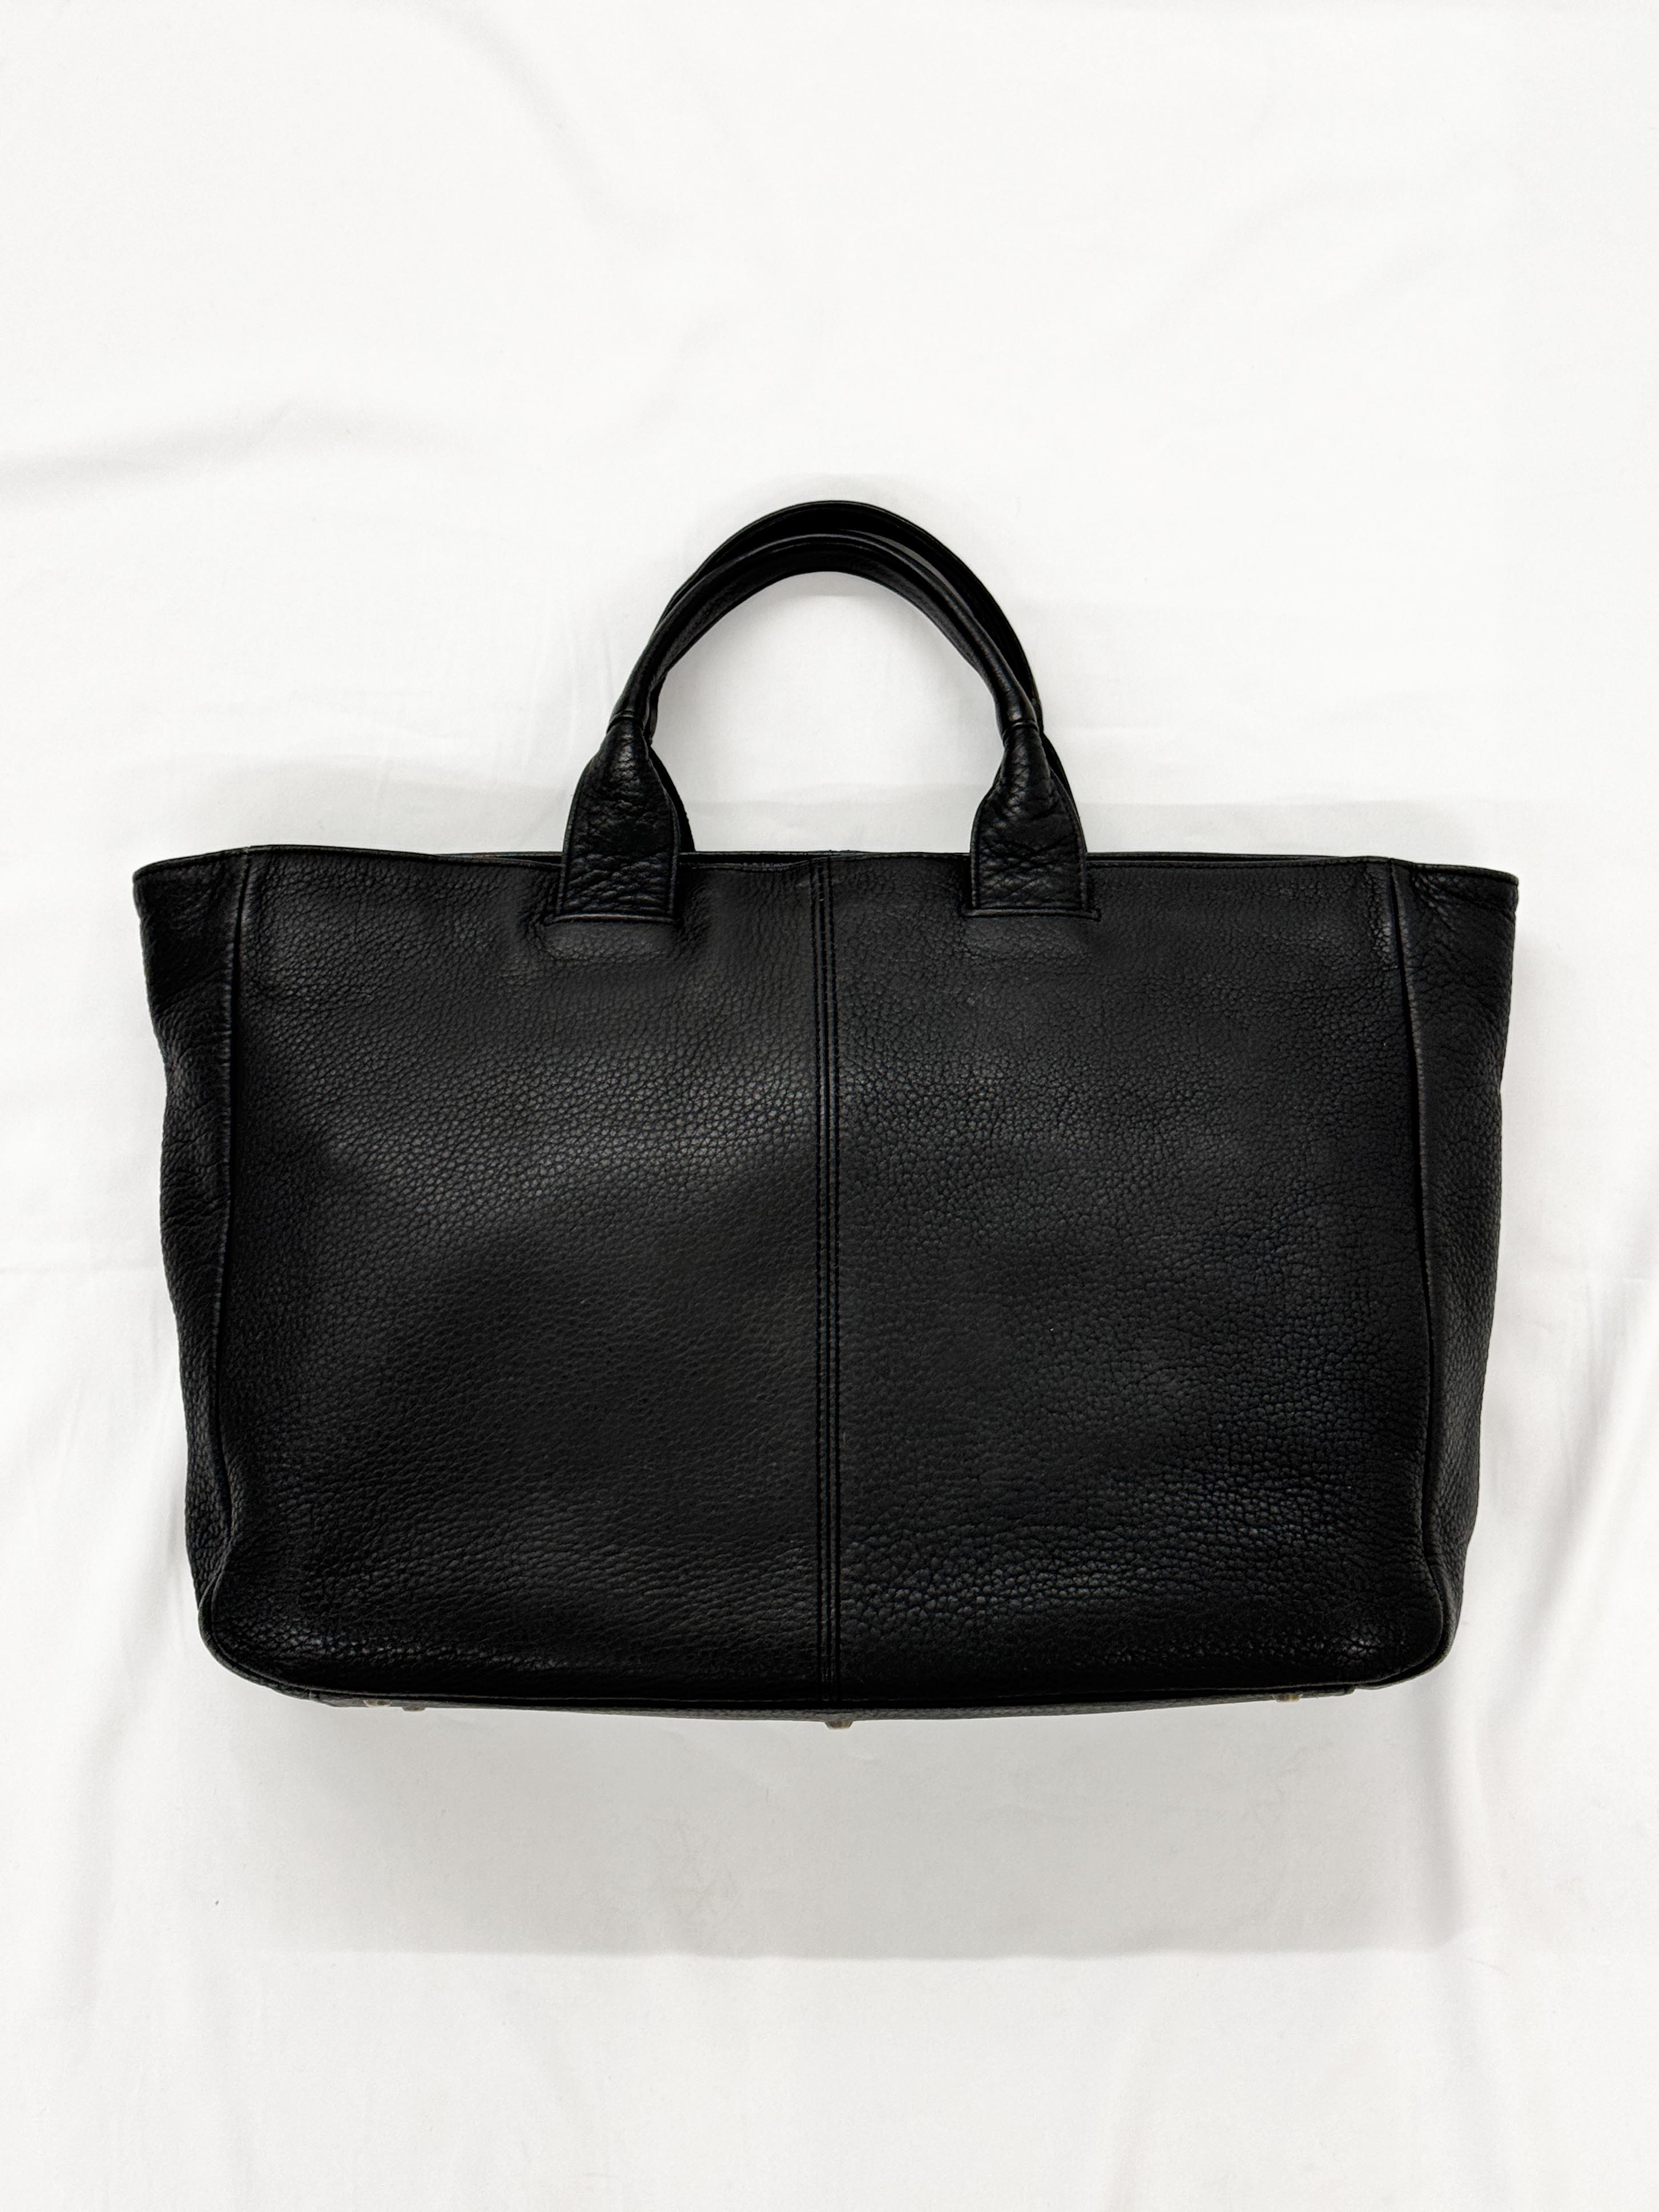 PORTER leather tote bag